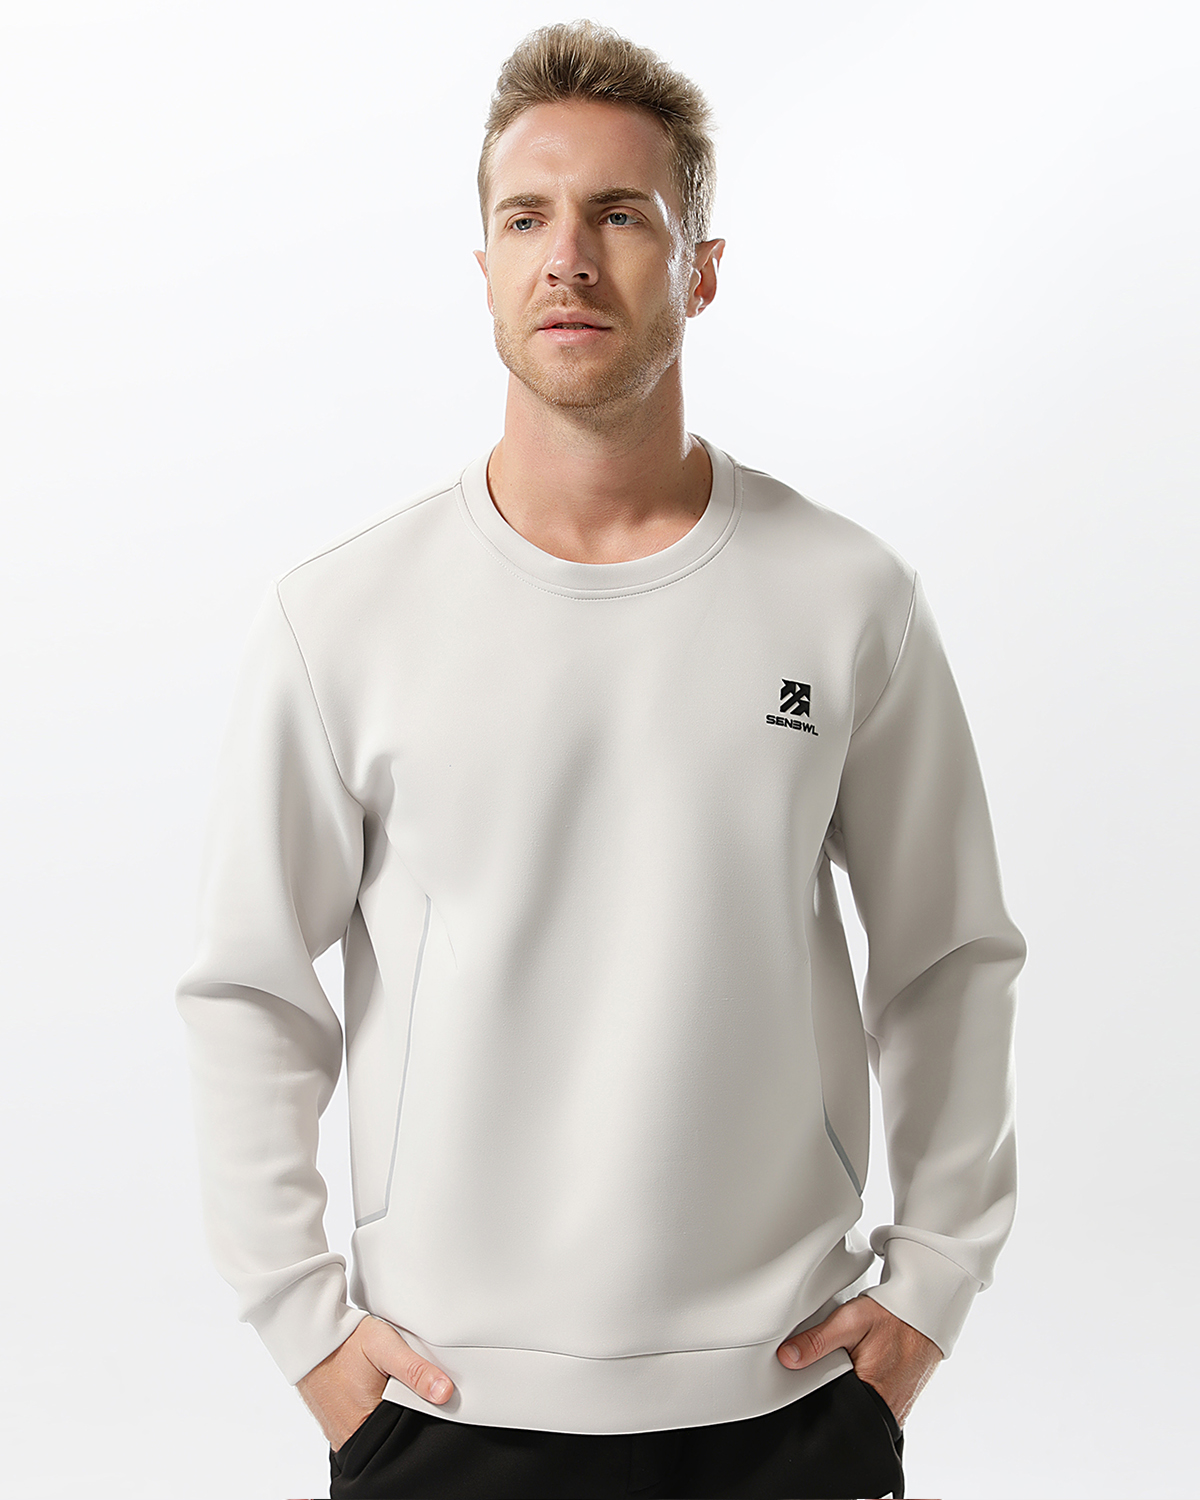 Senbwl Men's Quick Drying Sweatshirts-Senbwl Sports